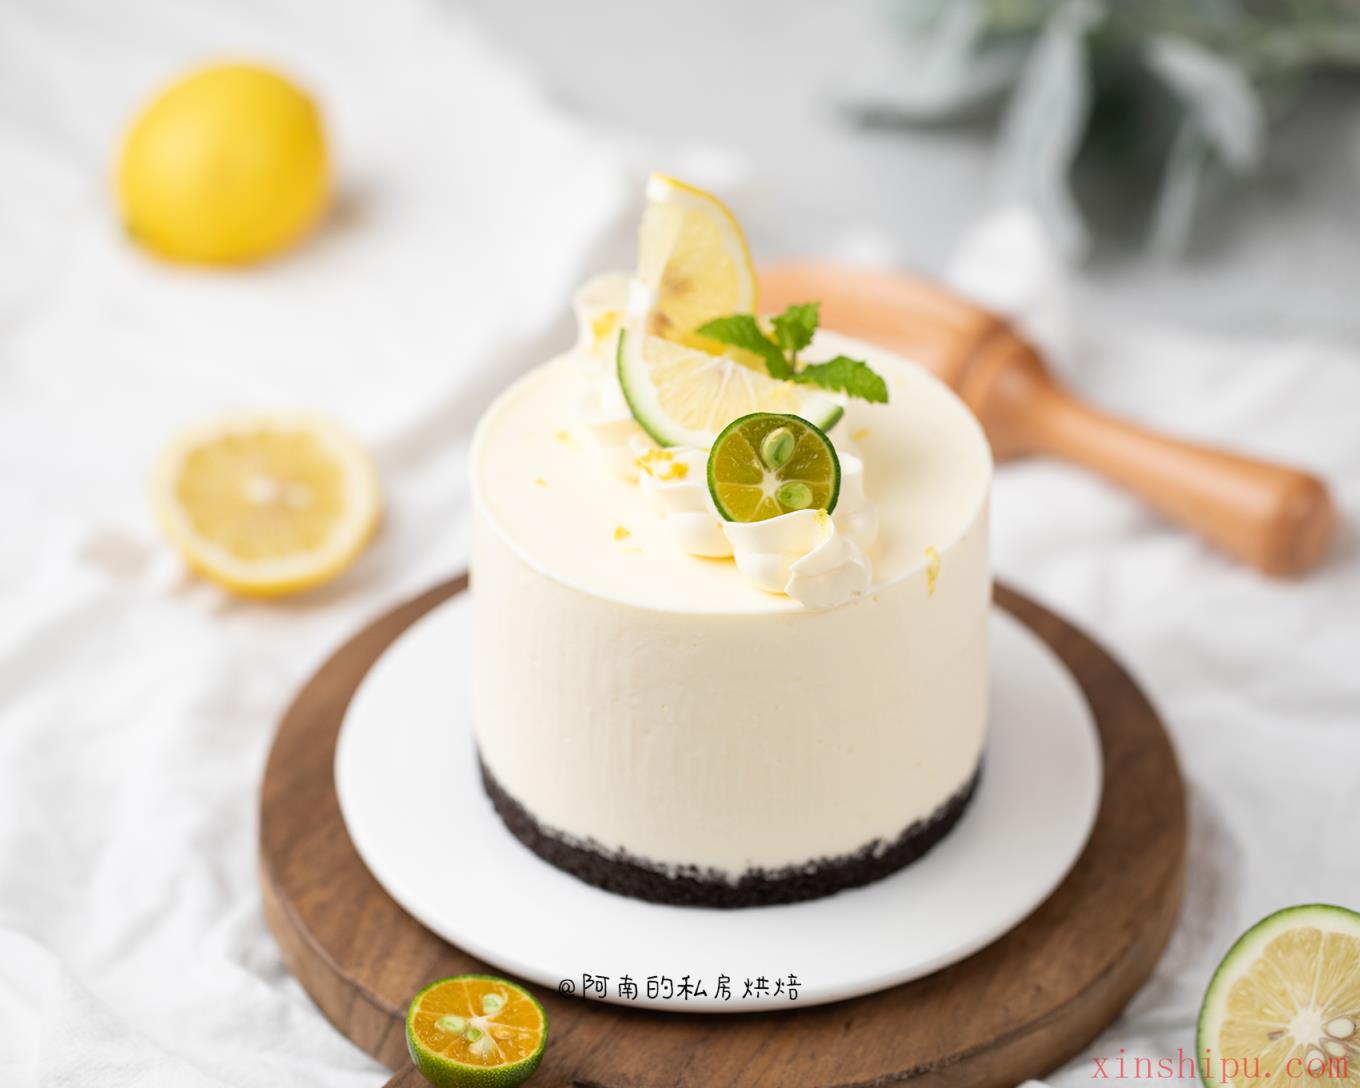 Ah Lynn的小小部落格: 母亲节蛋糕 ：英式柠檬蛋糕 English Lemon Gateau